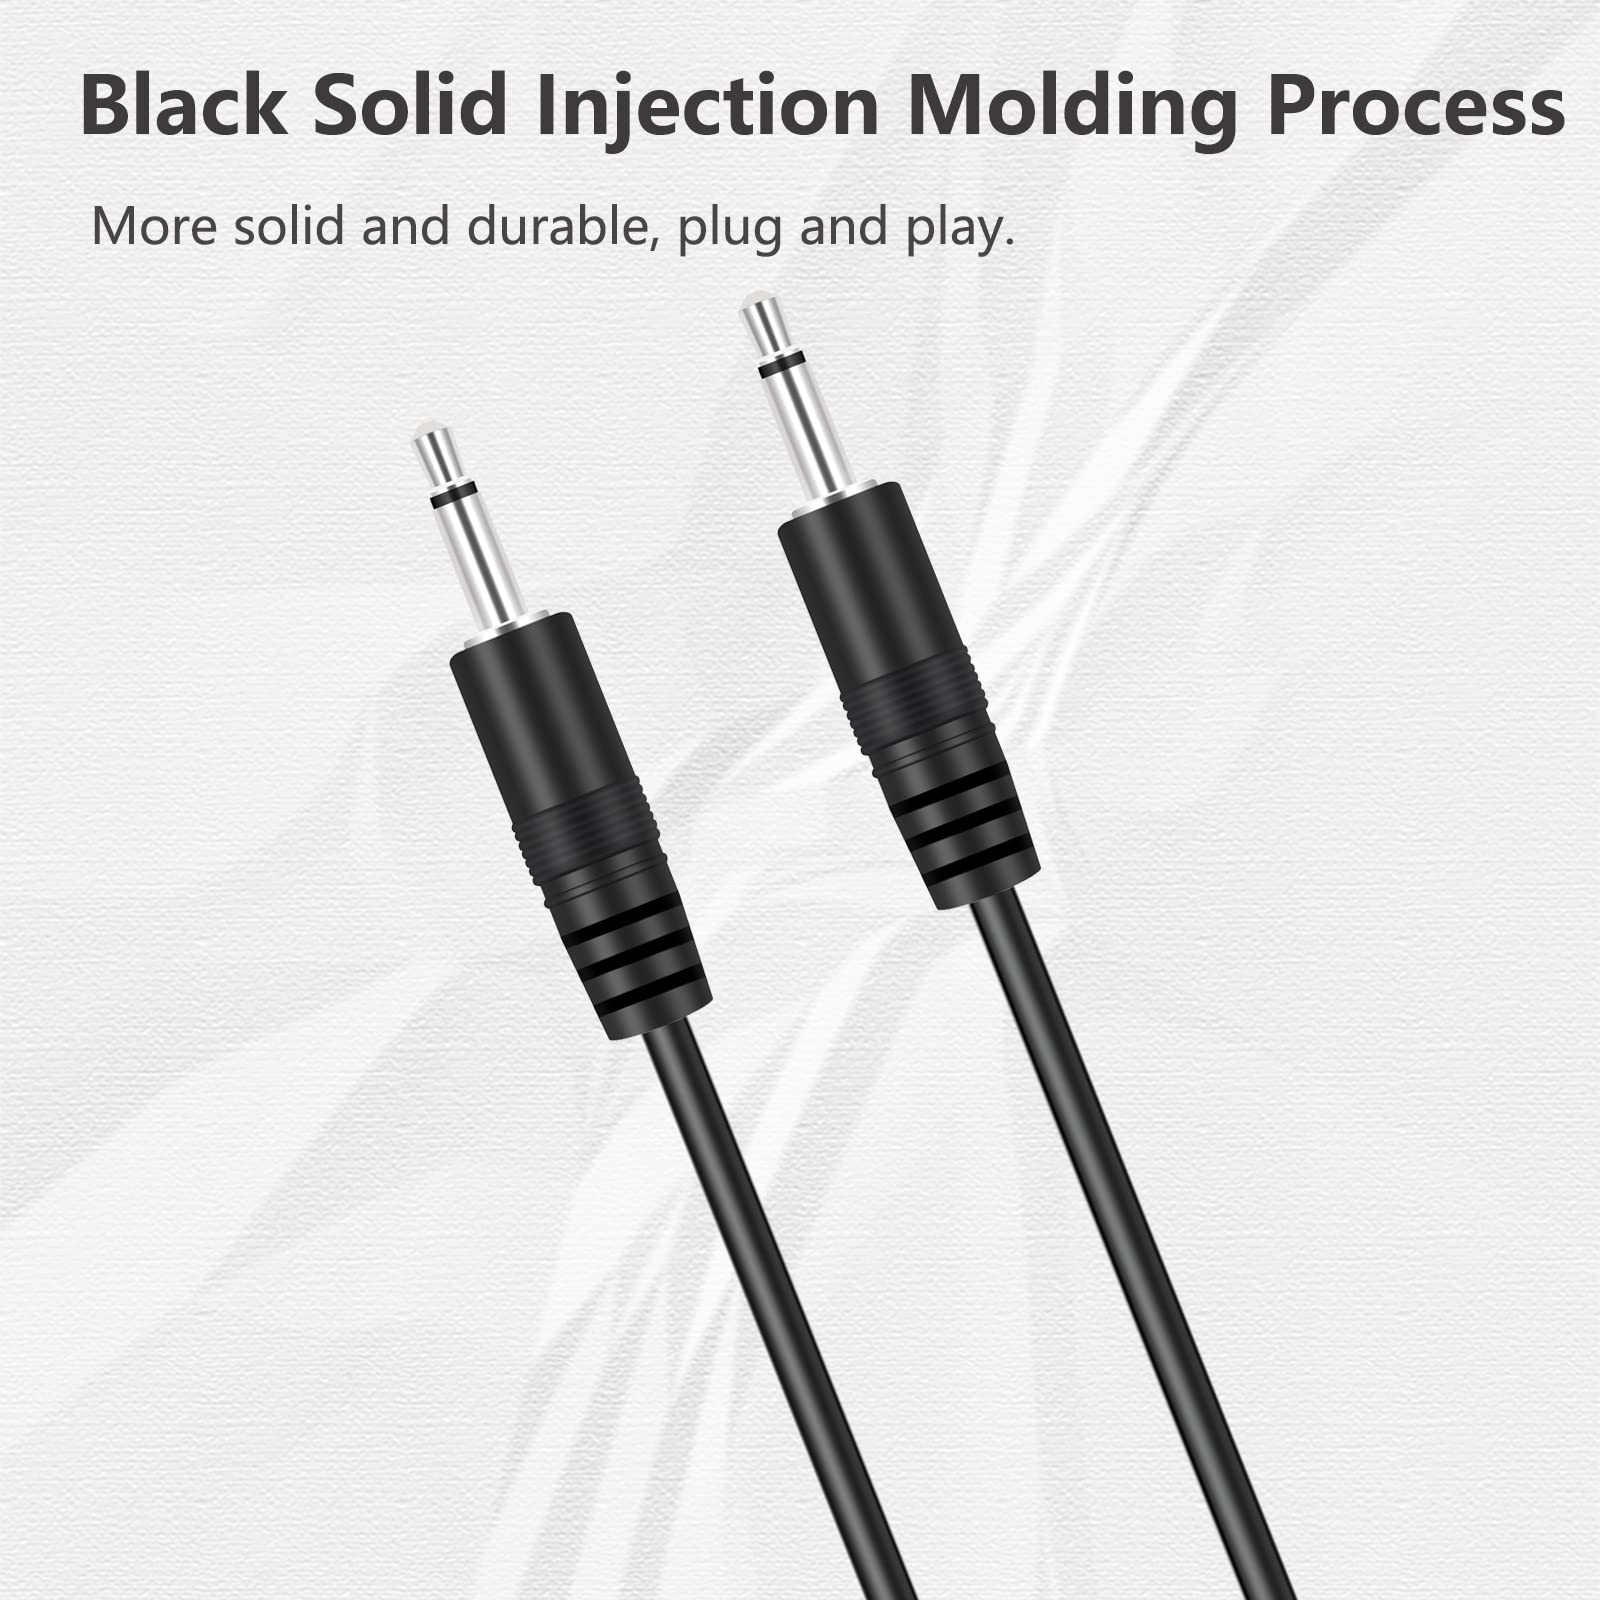 Bolvek 2 Pack 3.5mm 1/8" Male TS Mono Plug to 3.5mm Male Mono Jack Audio Cable